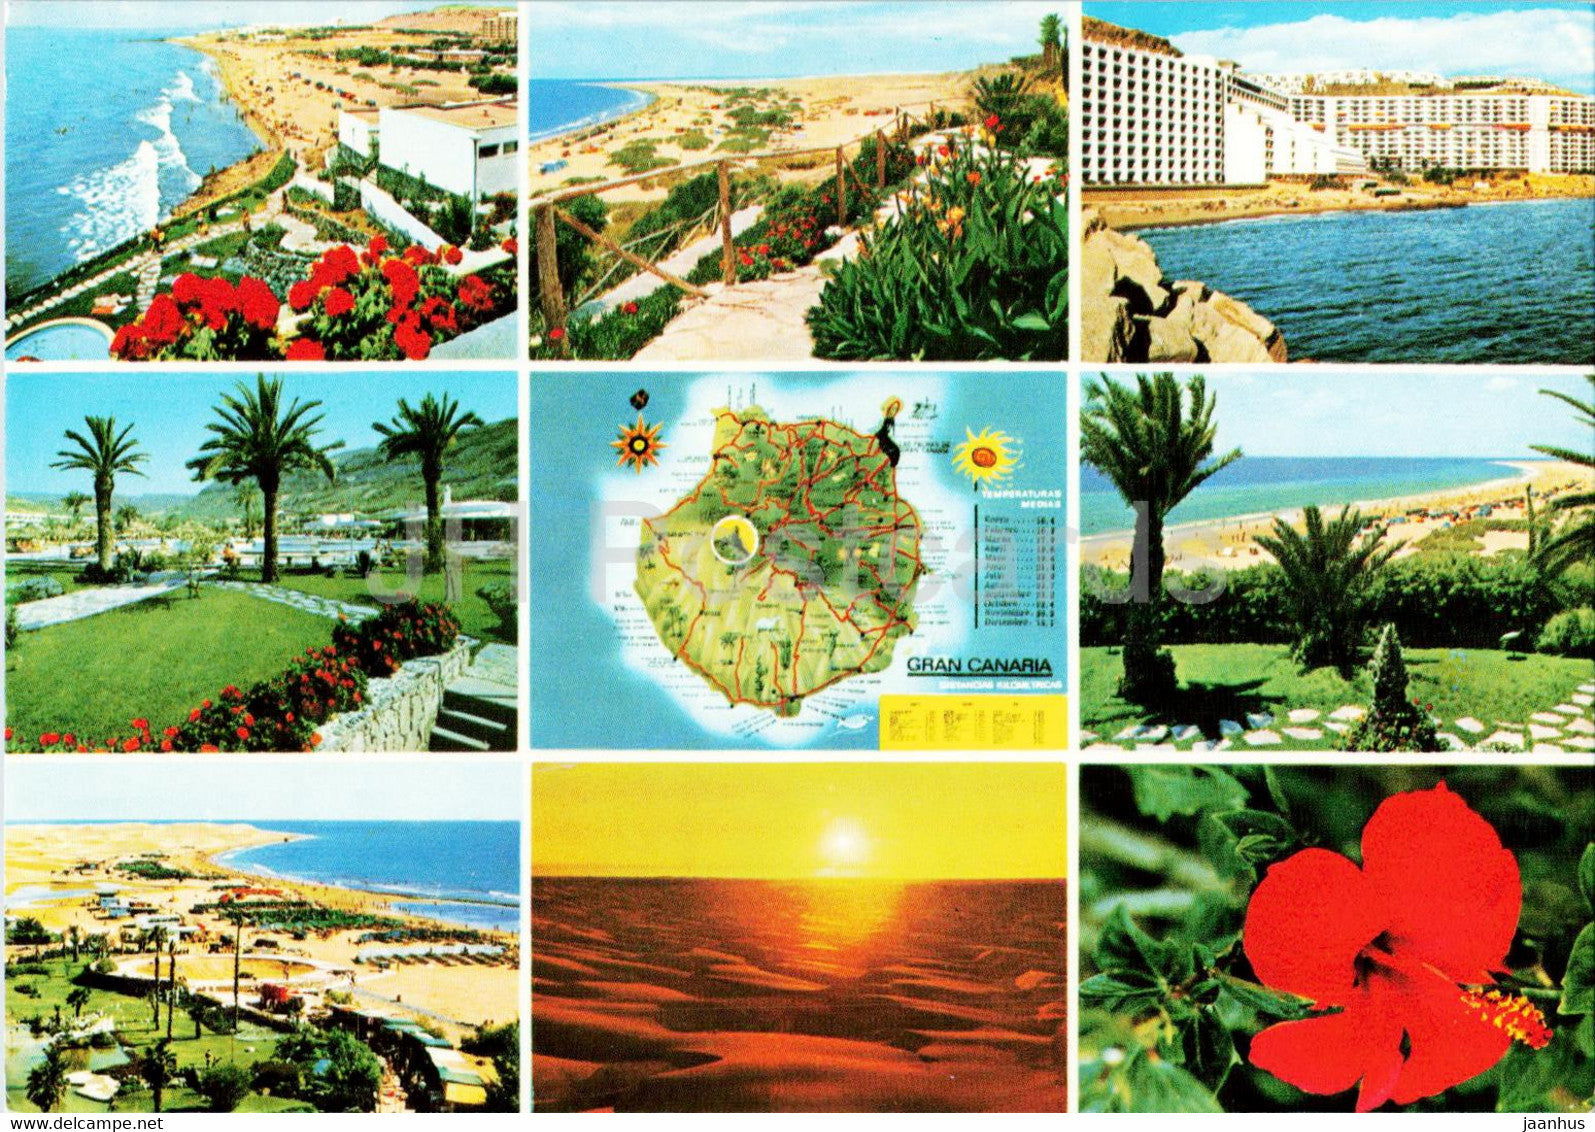 Gran Canaria - Souvenirs Playa del Ingles - map - multiview - Spain - unused - JH Postcards